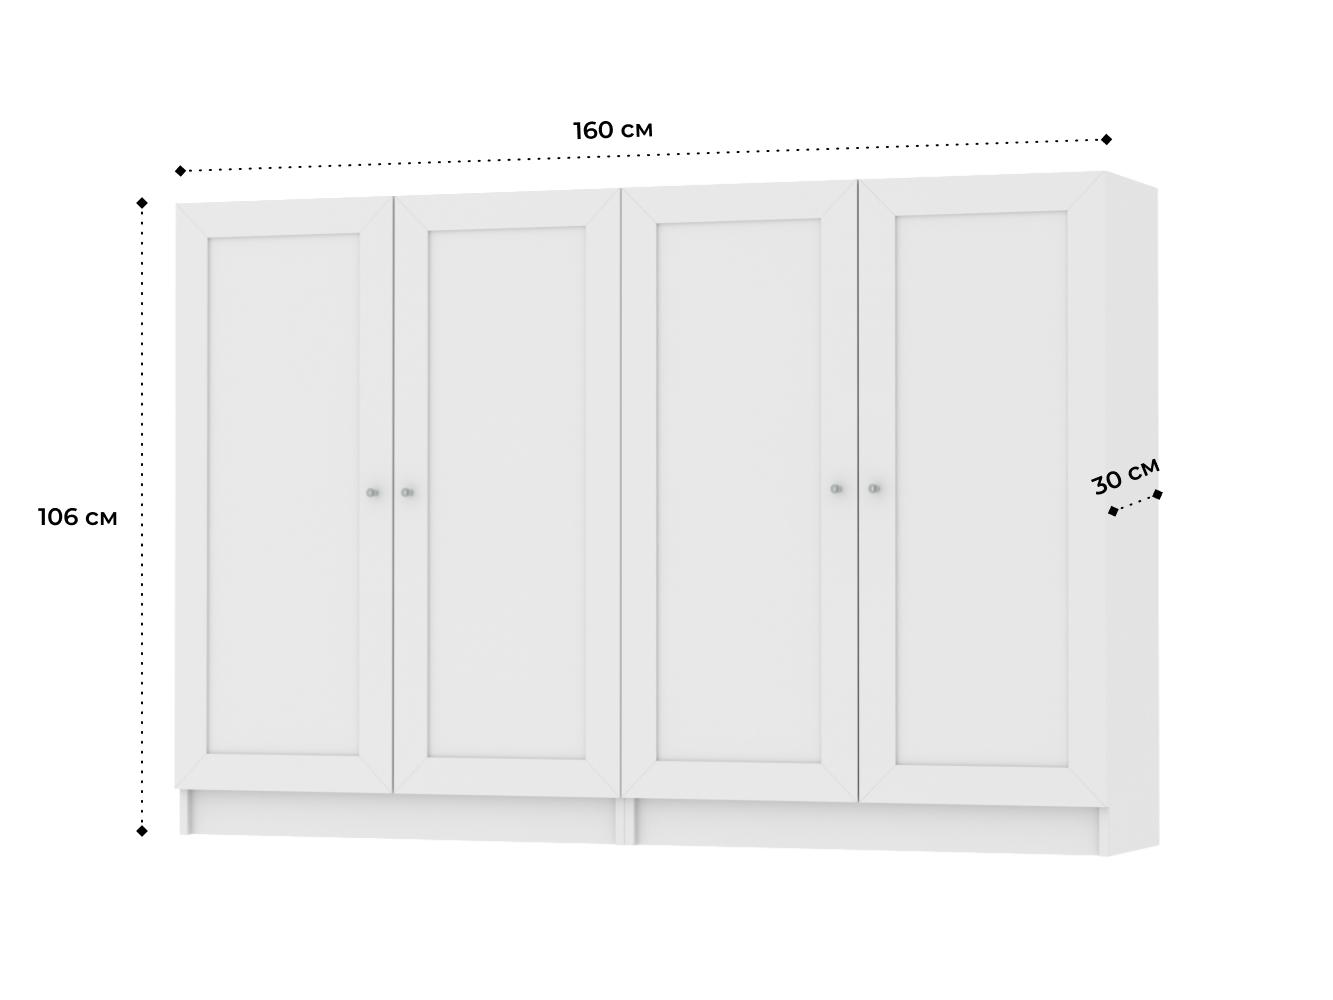 Изображение товара Комод Билли 216 white ИКЕА (IKEA), 160x30x106 см на сайте adeta.ru